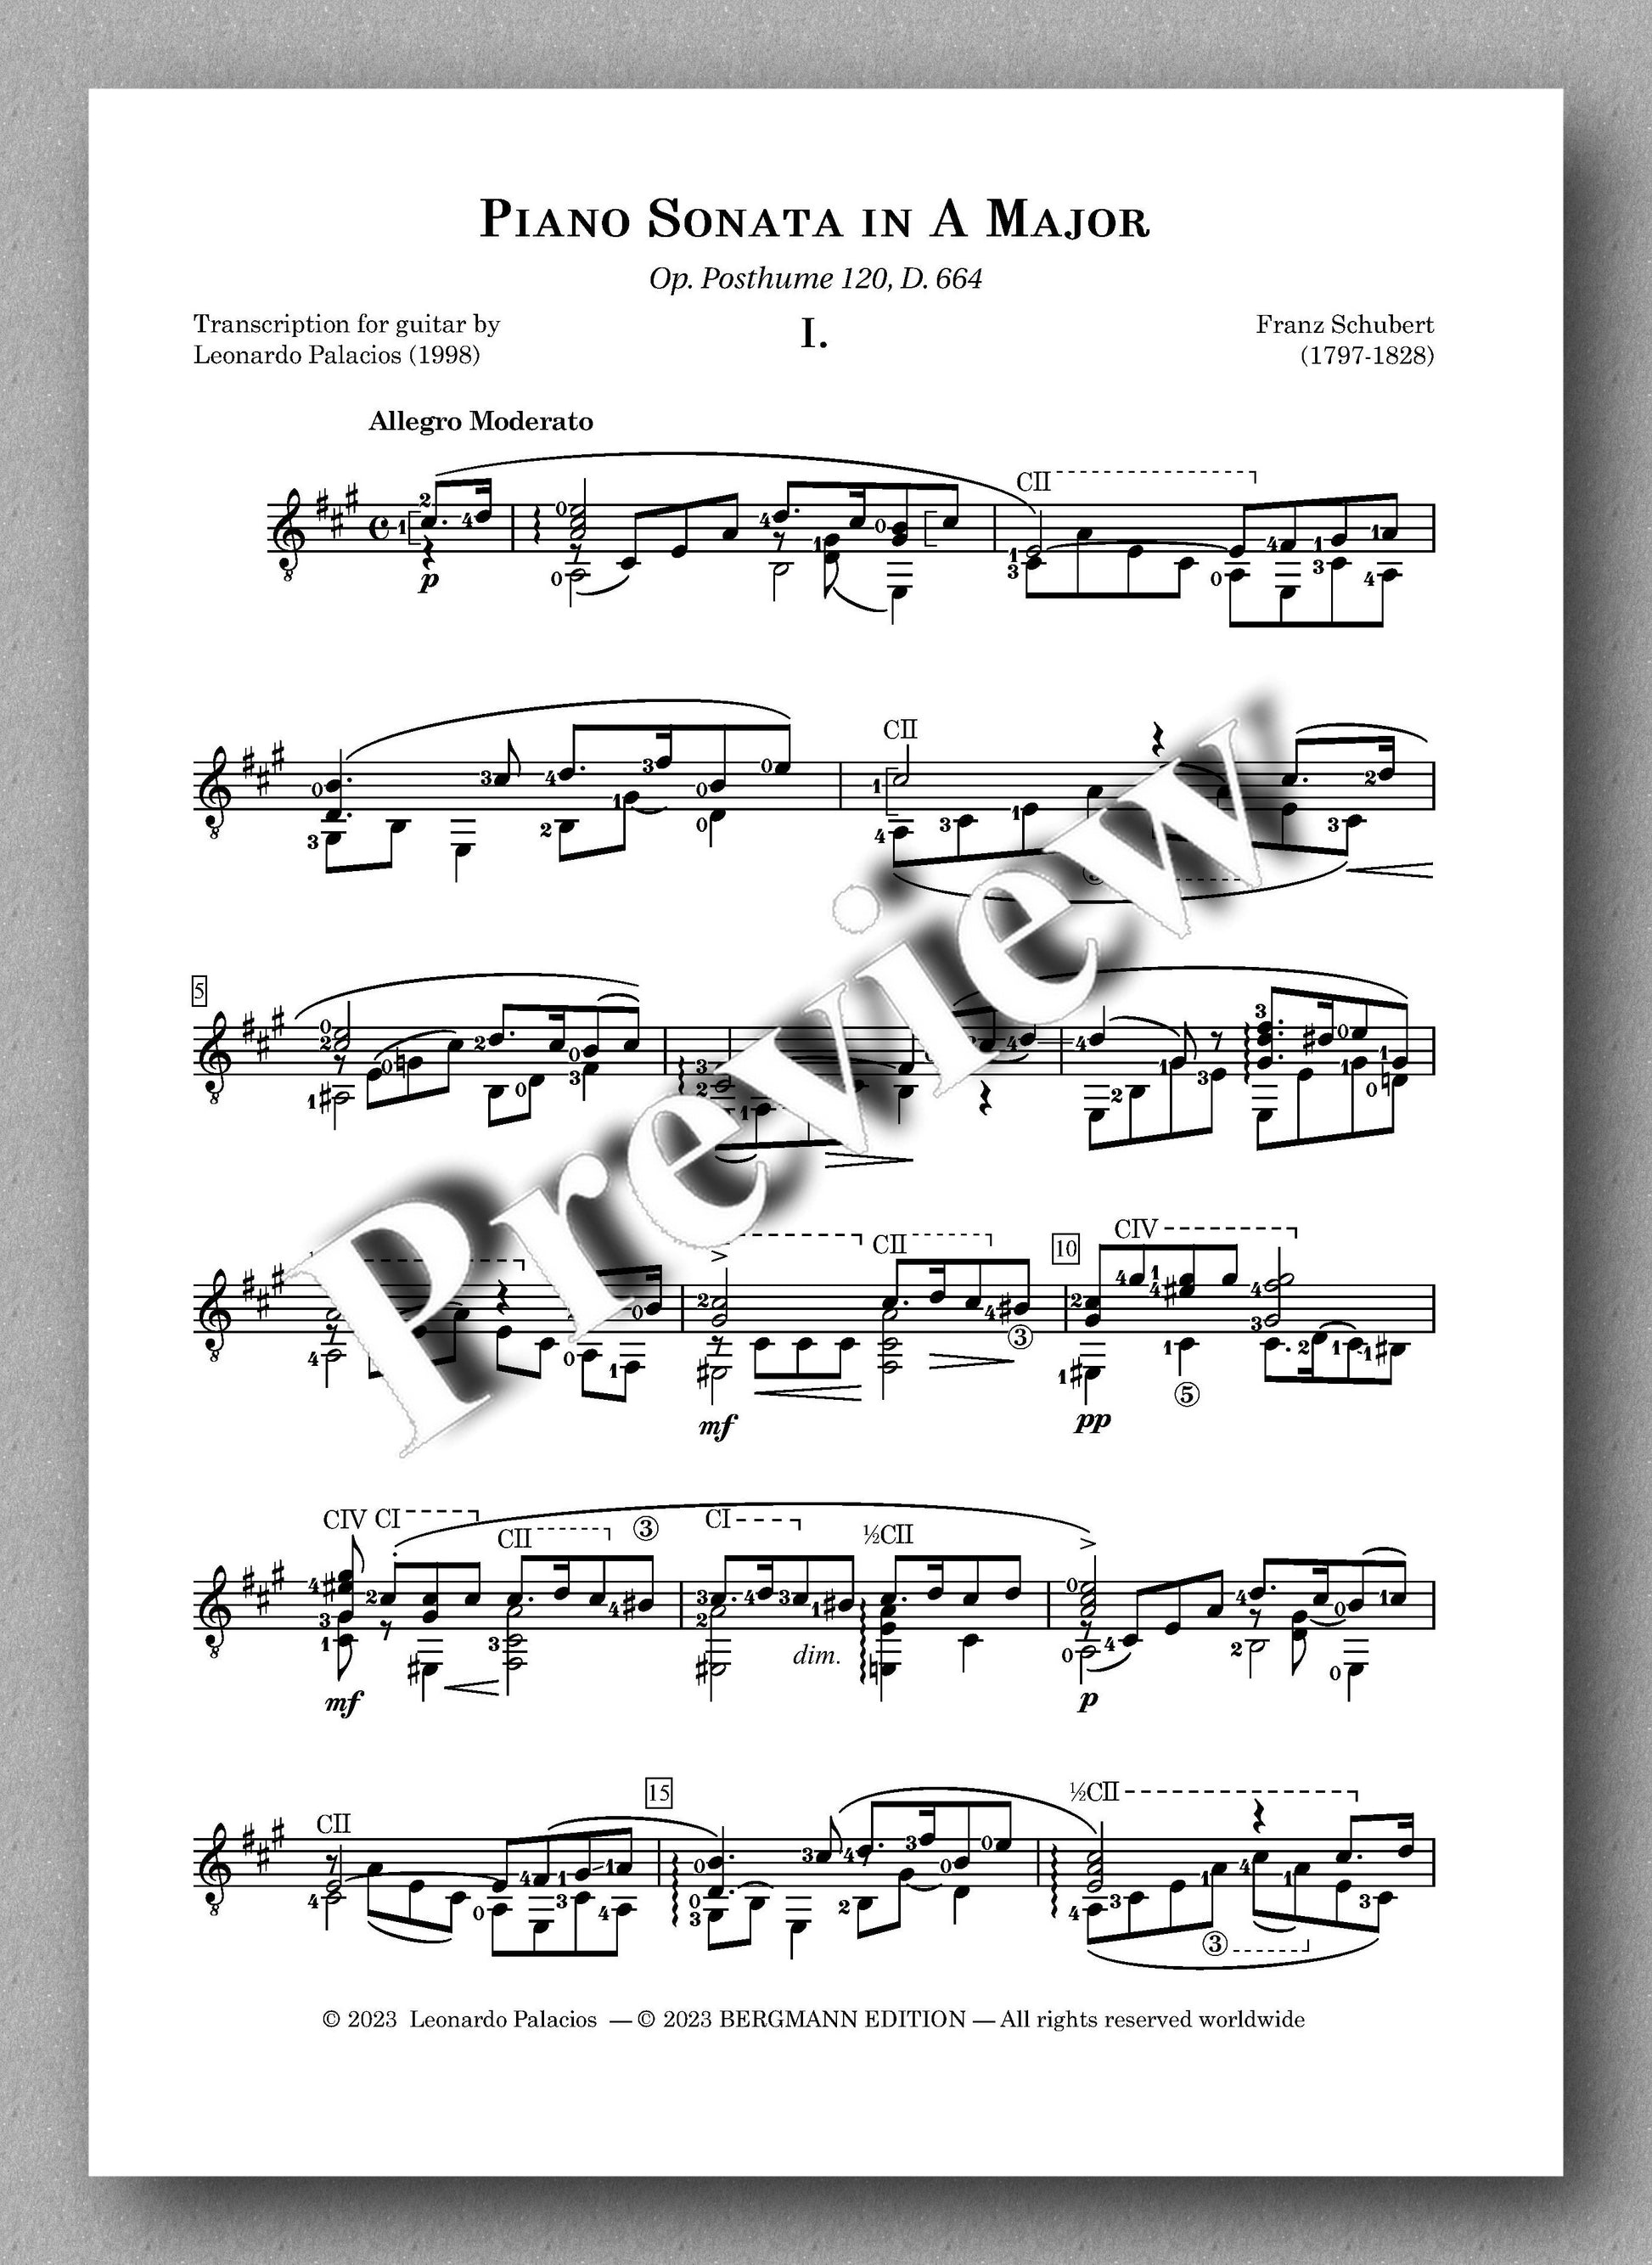 Frantz Schubert, Piano Sonata in A Major- preview of the music score 1